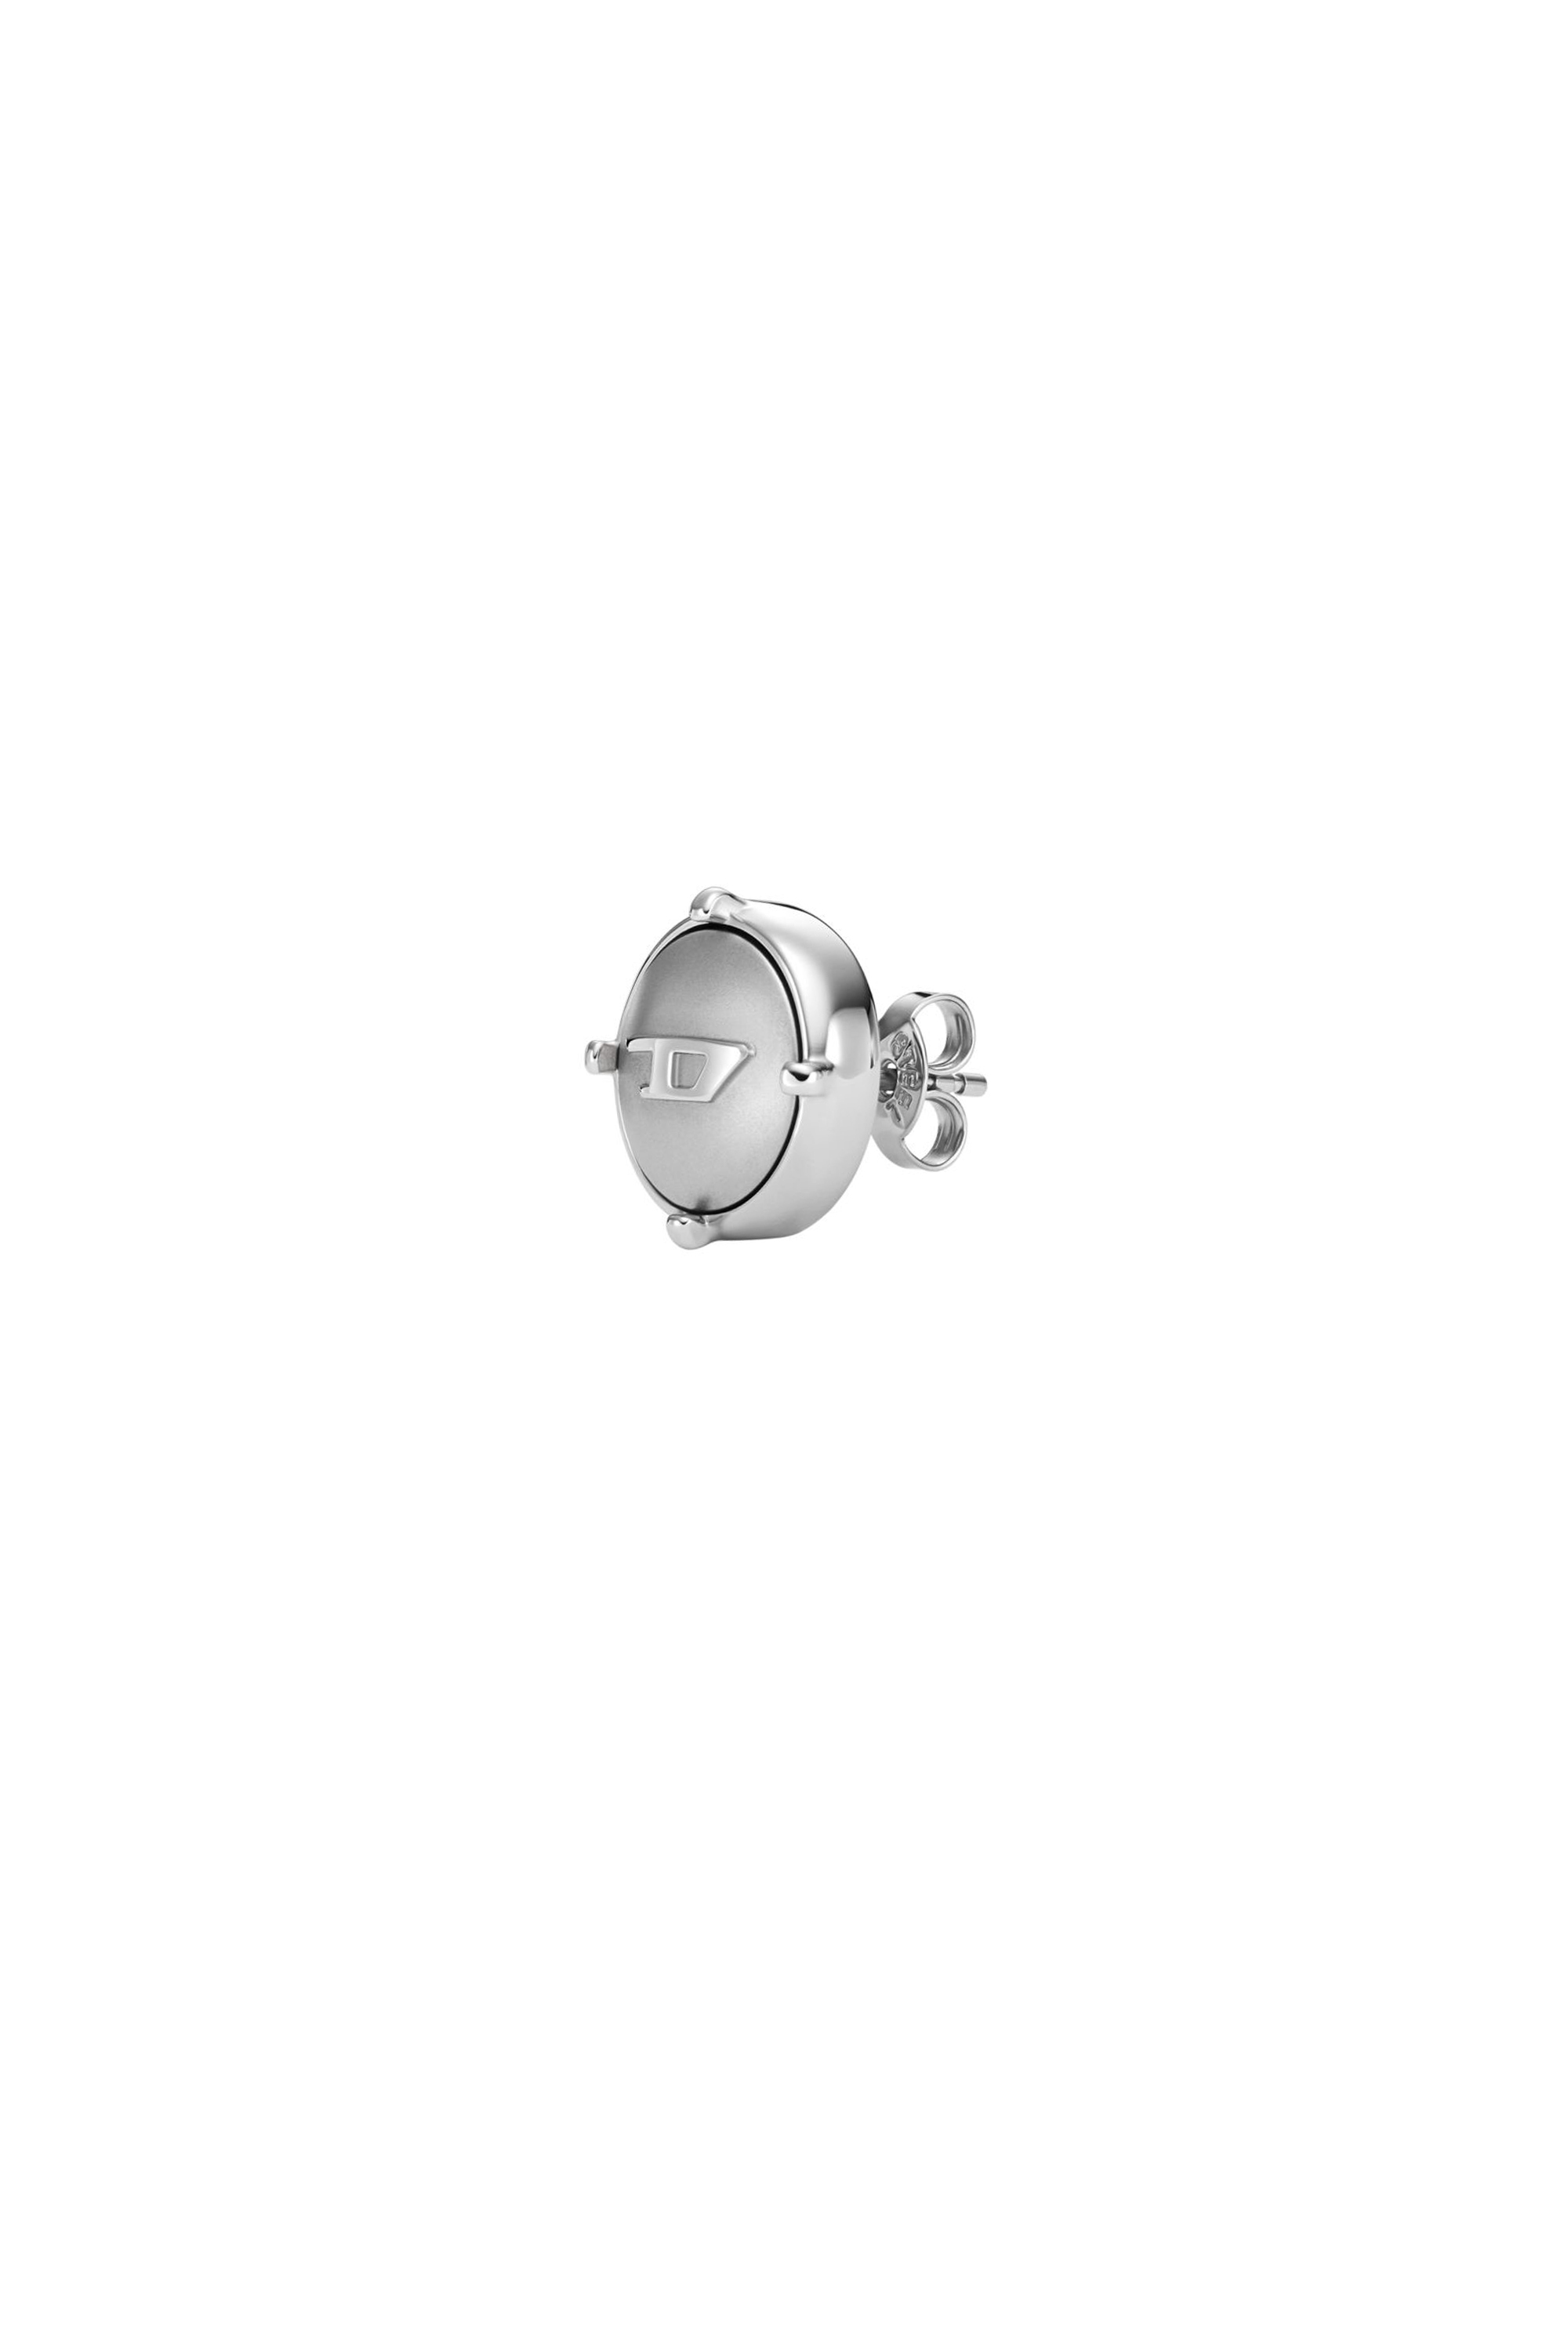 Diesel - DX1495, Male Stainless steel stud earring in シルバー - Image 1